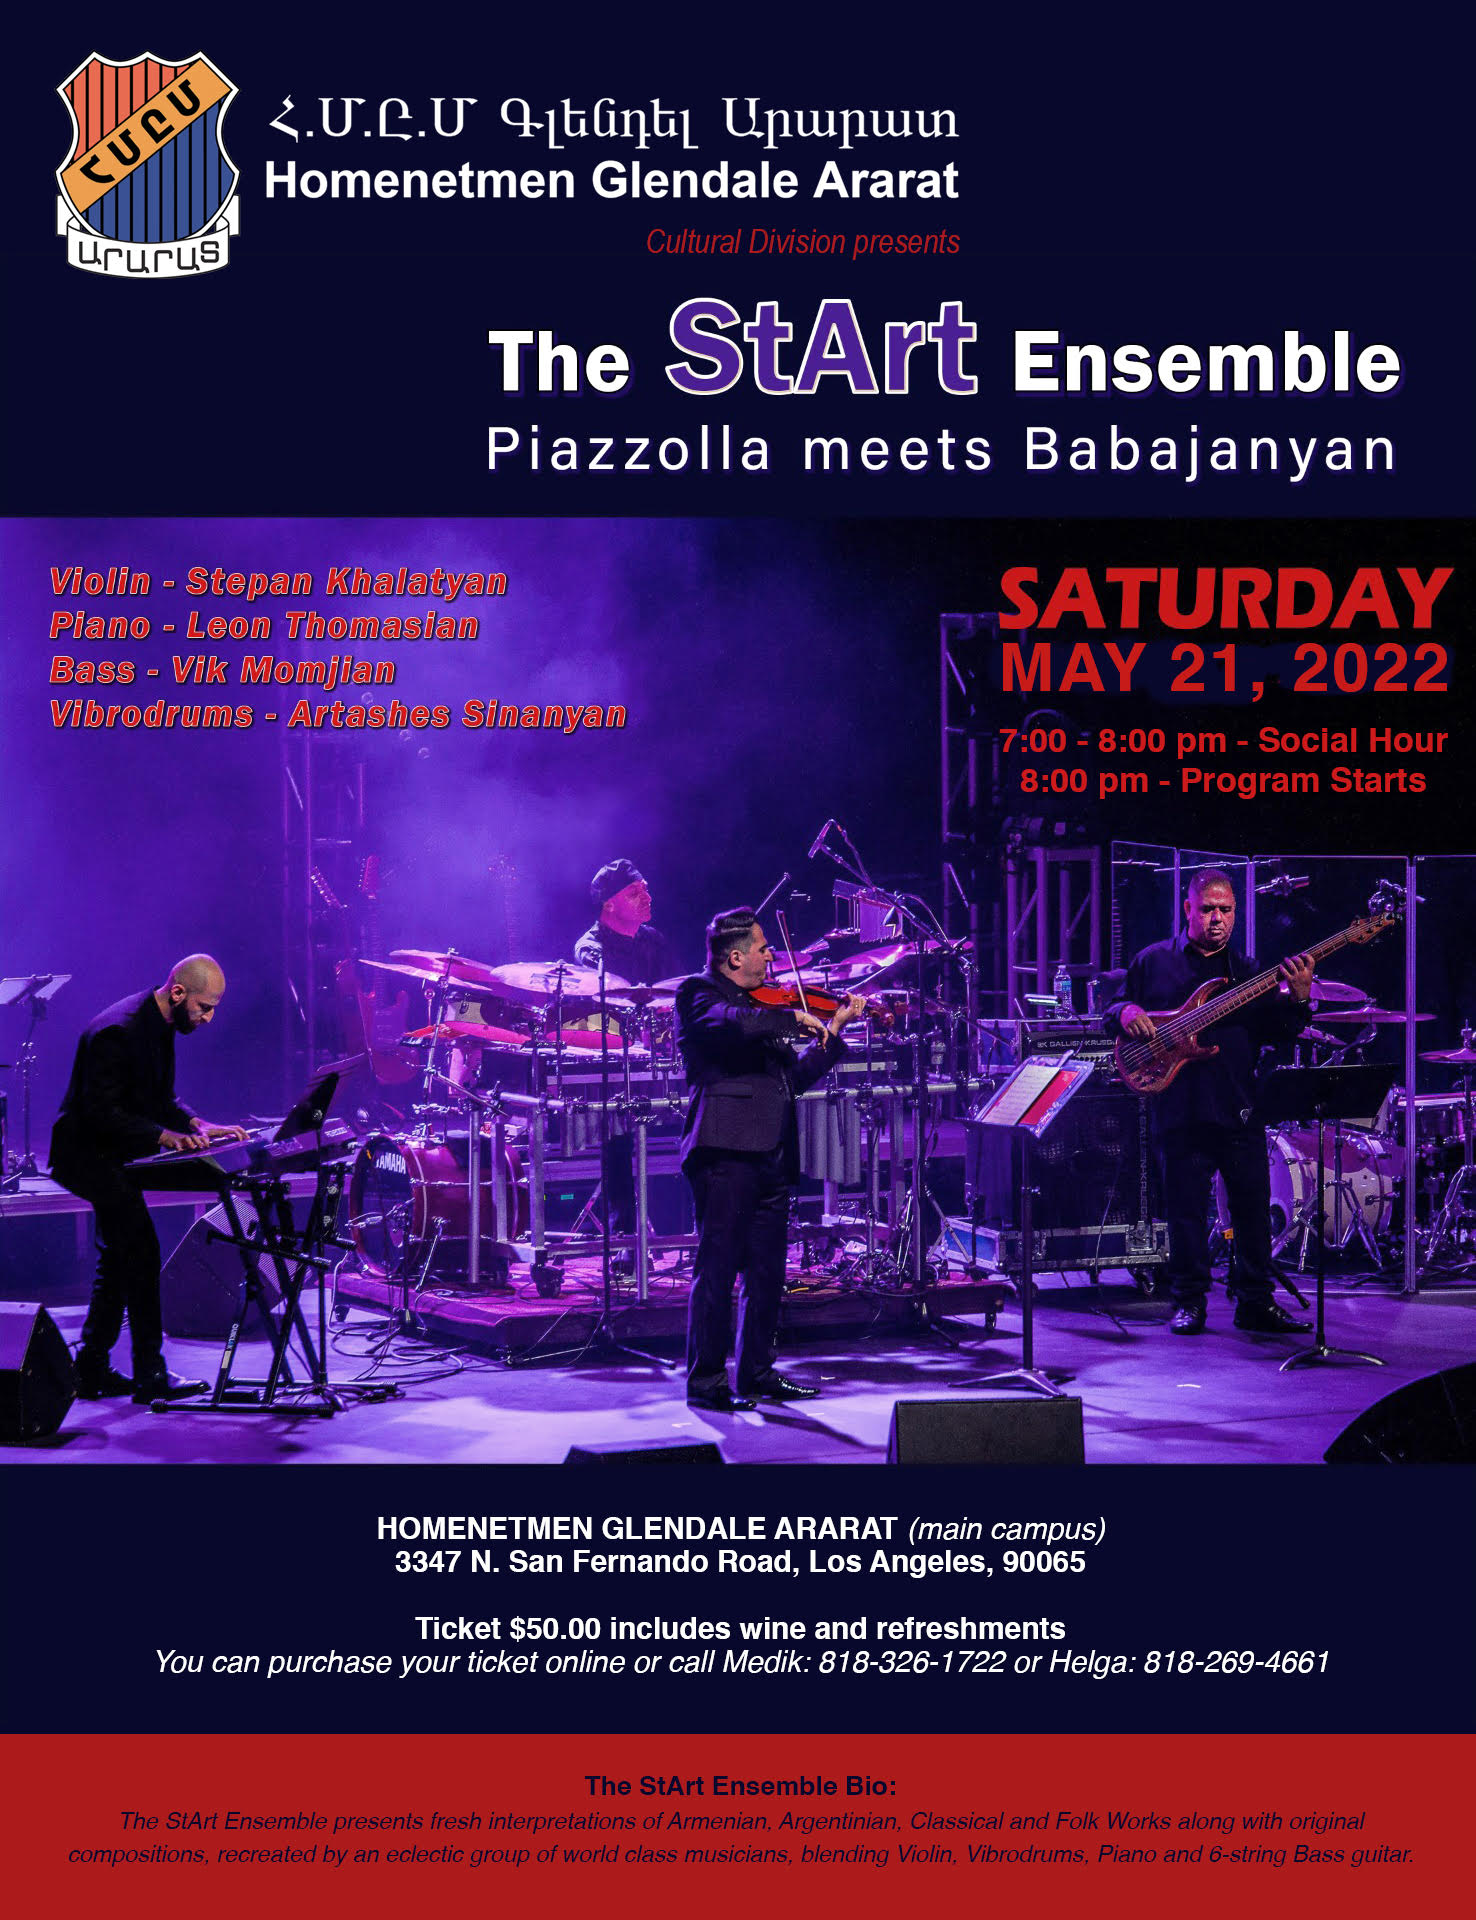 The StArt Ensemble Piazzolla meets Babajanyan